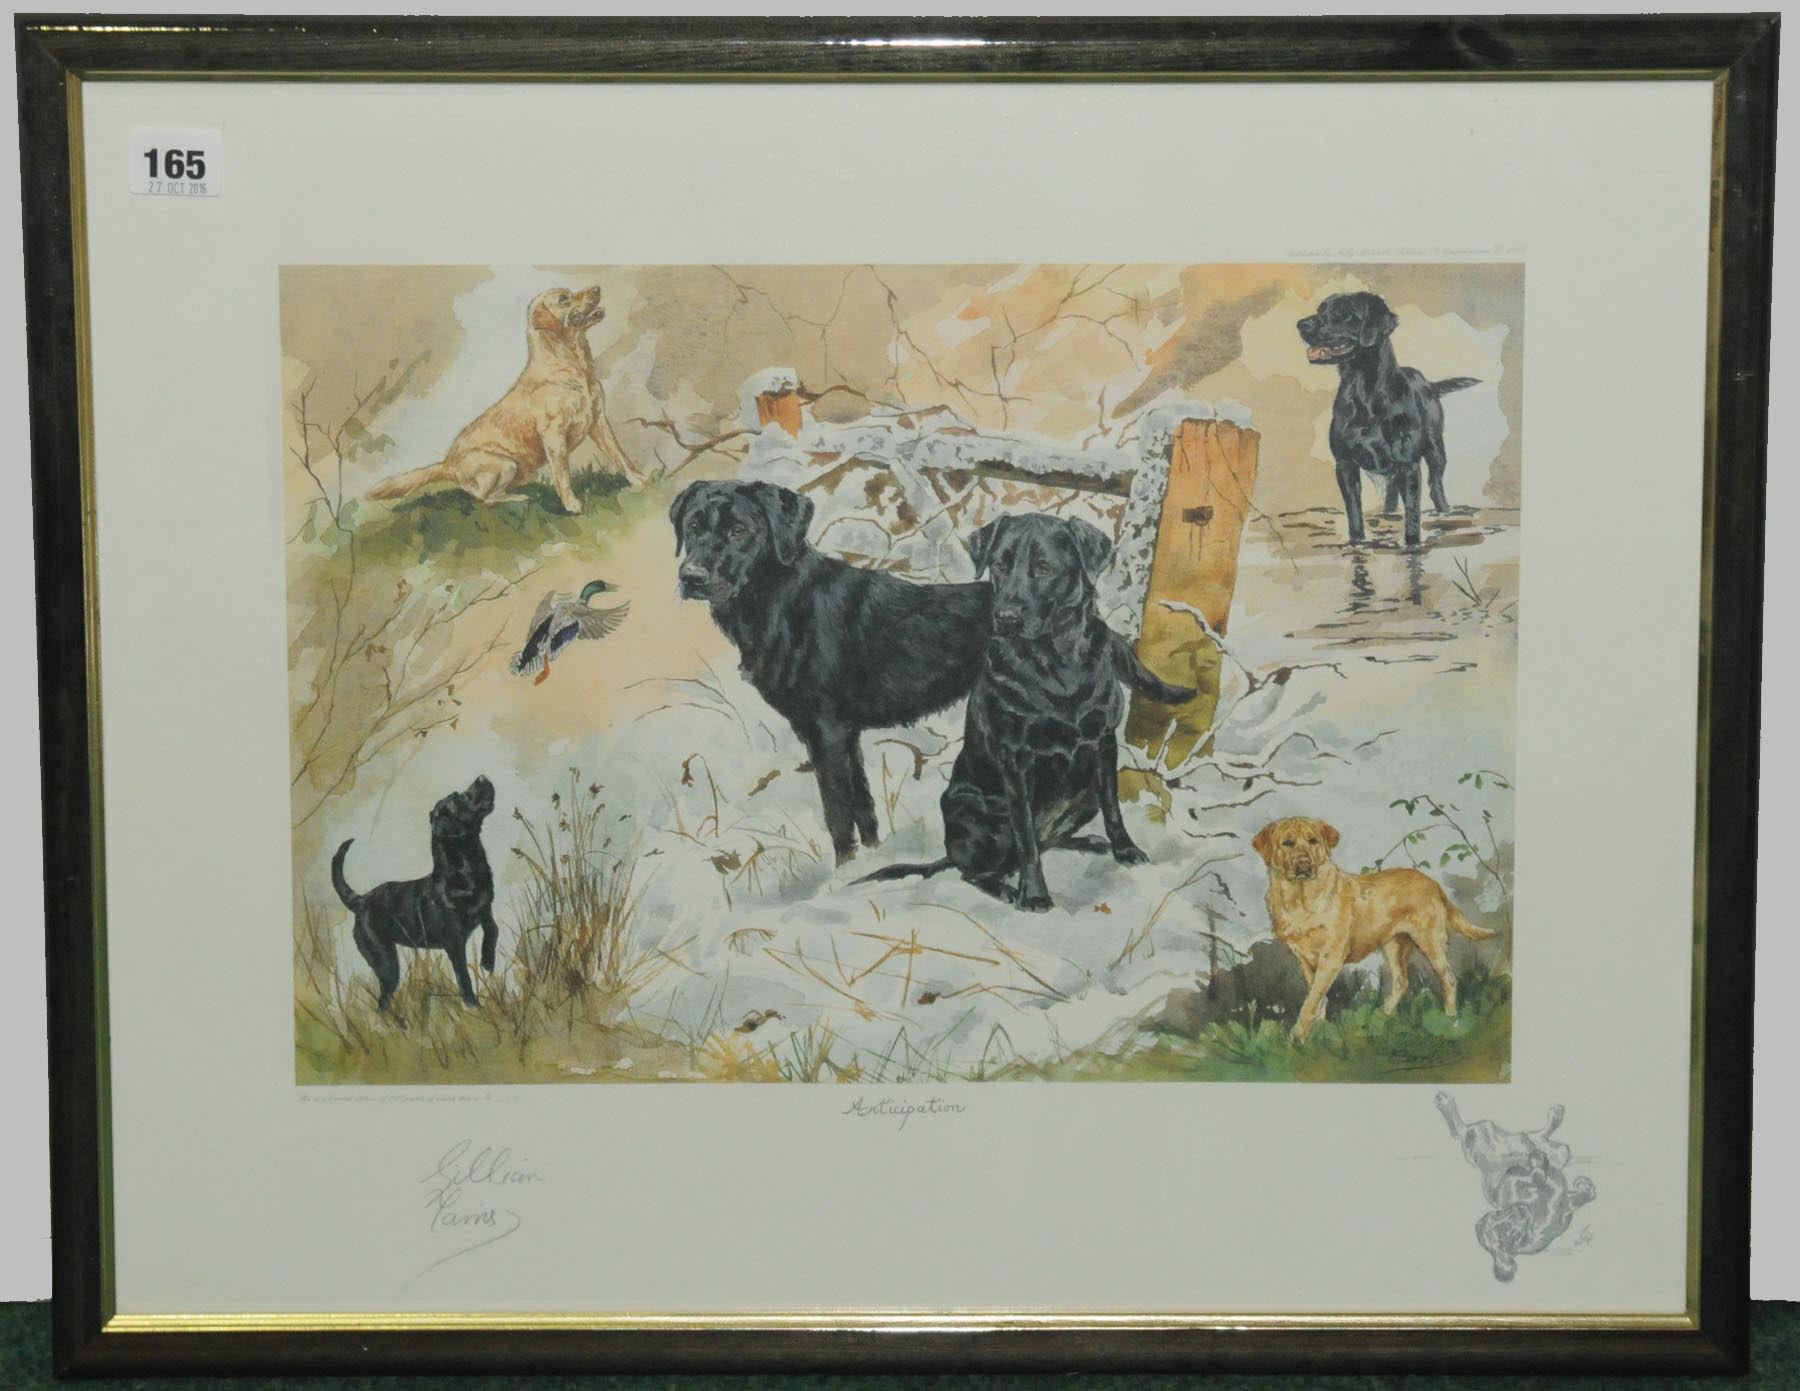 "Anticipation", a colour print depicting Labrador dogs, after an original by Gillian Carris, ltd.